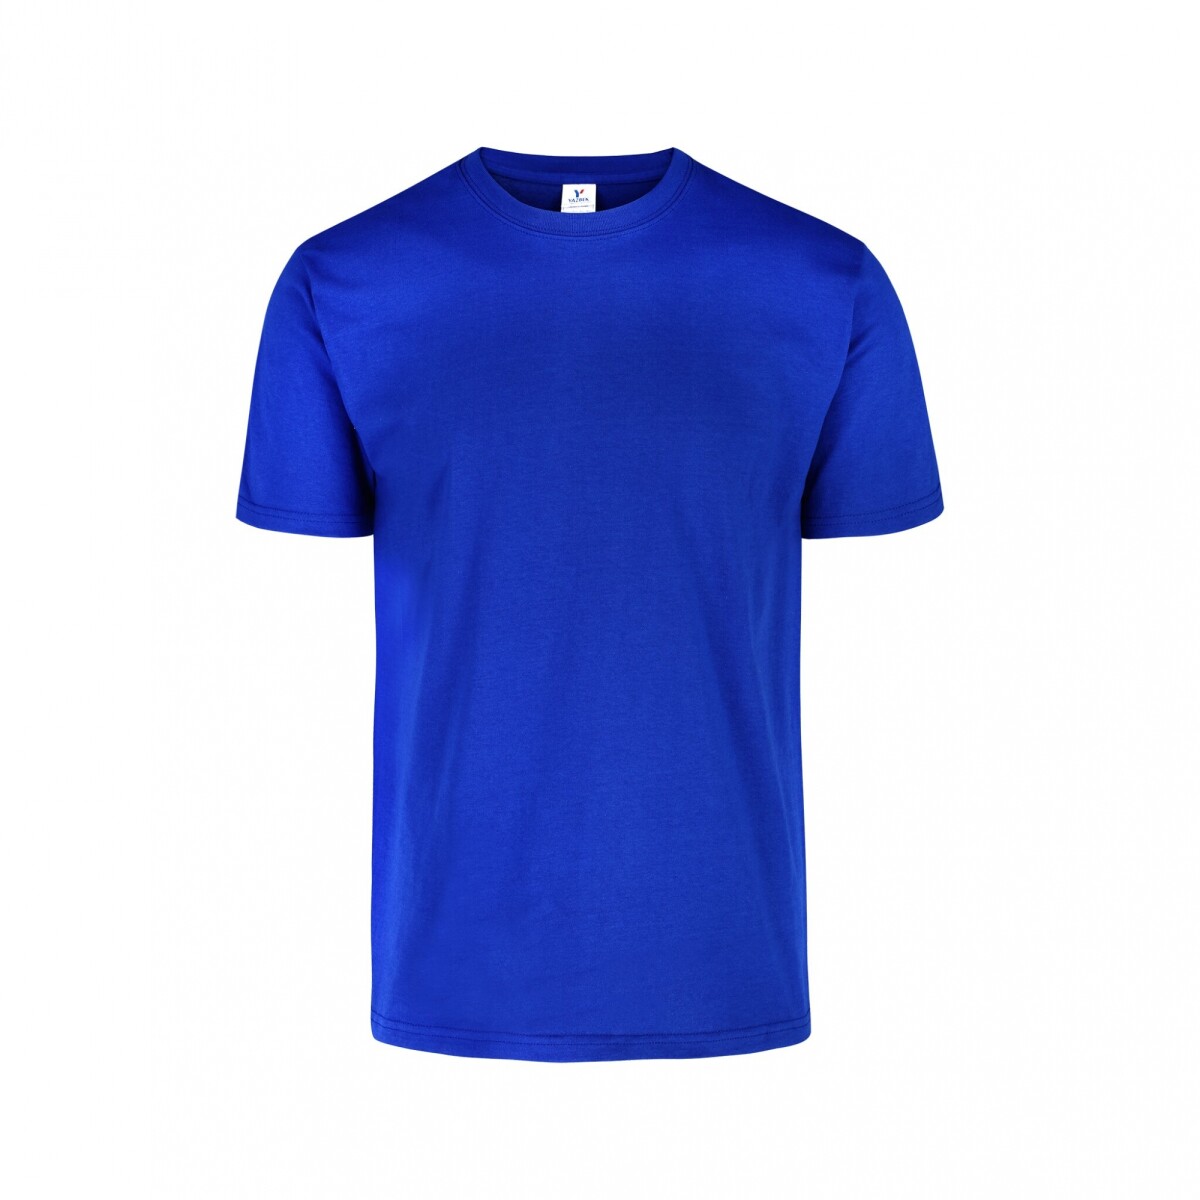 Camiseta a la base peso medio - Azul royal 